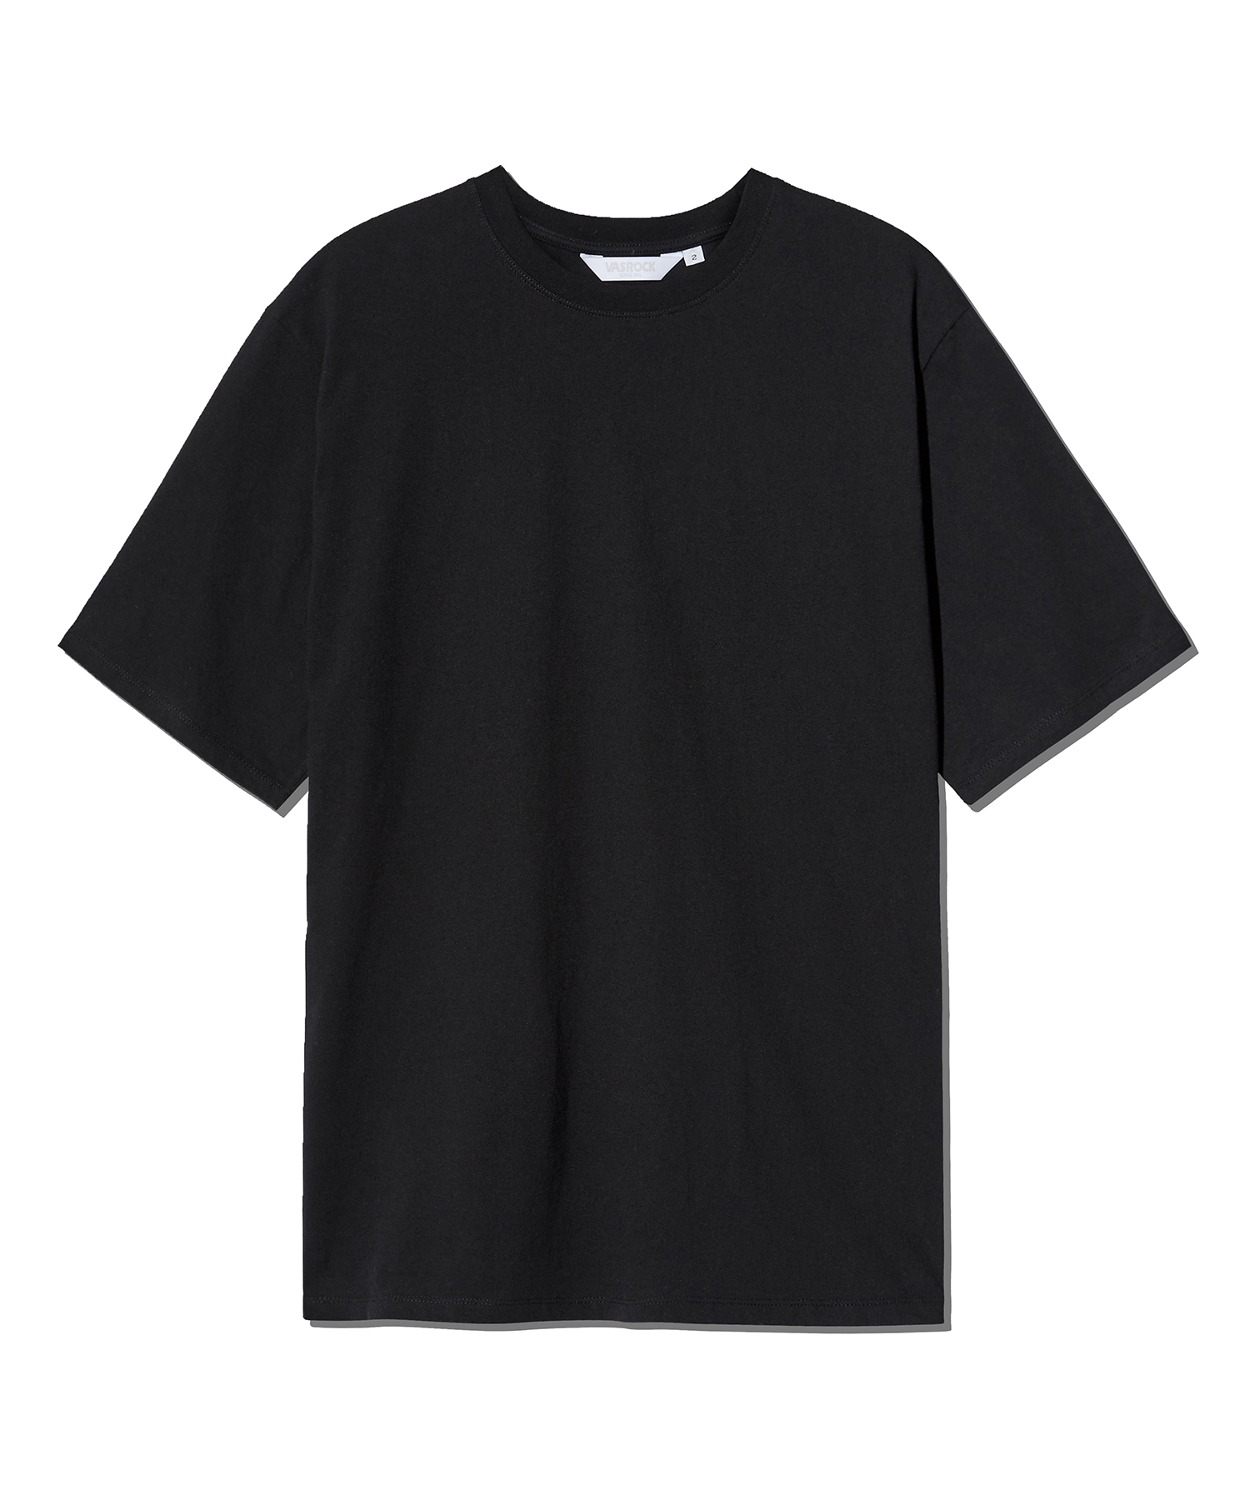 VASROCK,Side Square Short Sleeve T-shirt Black